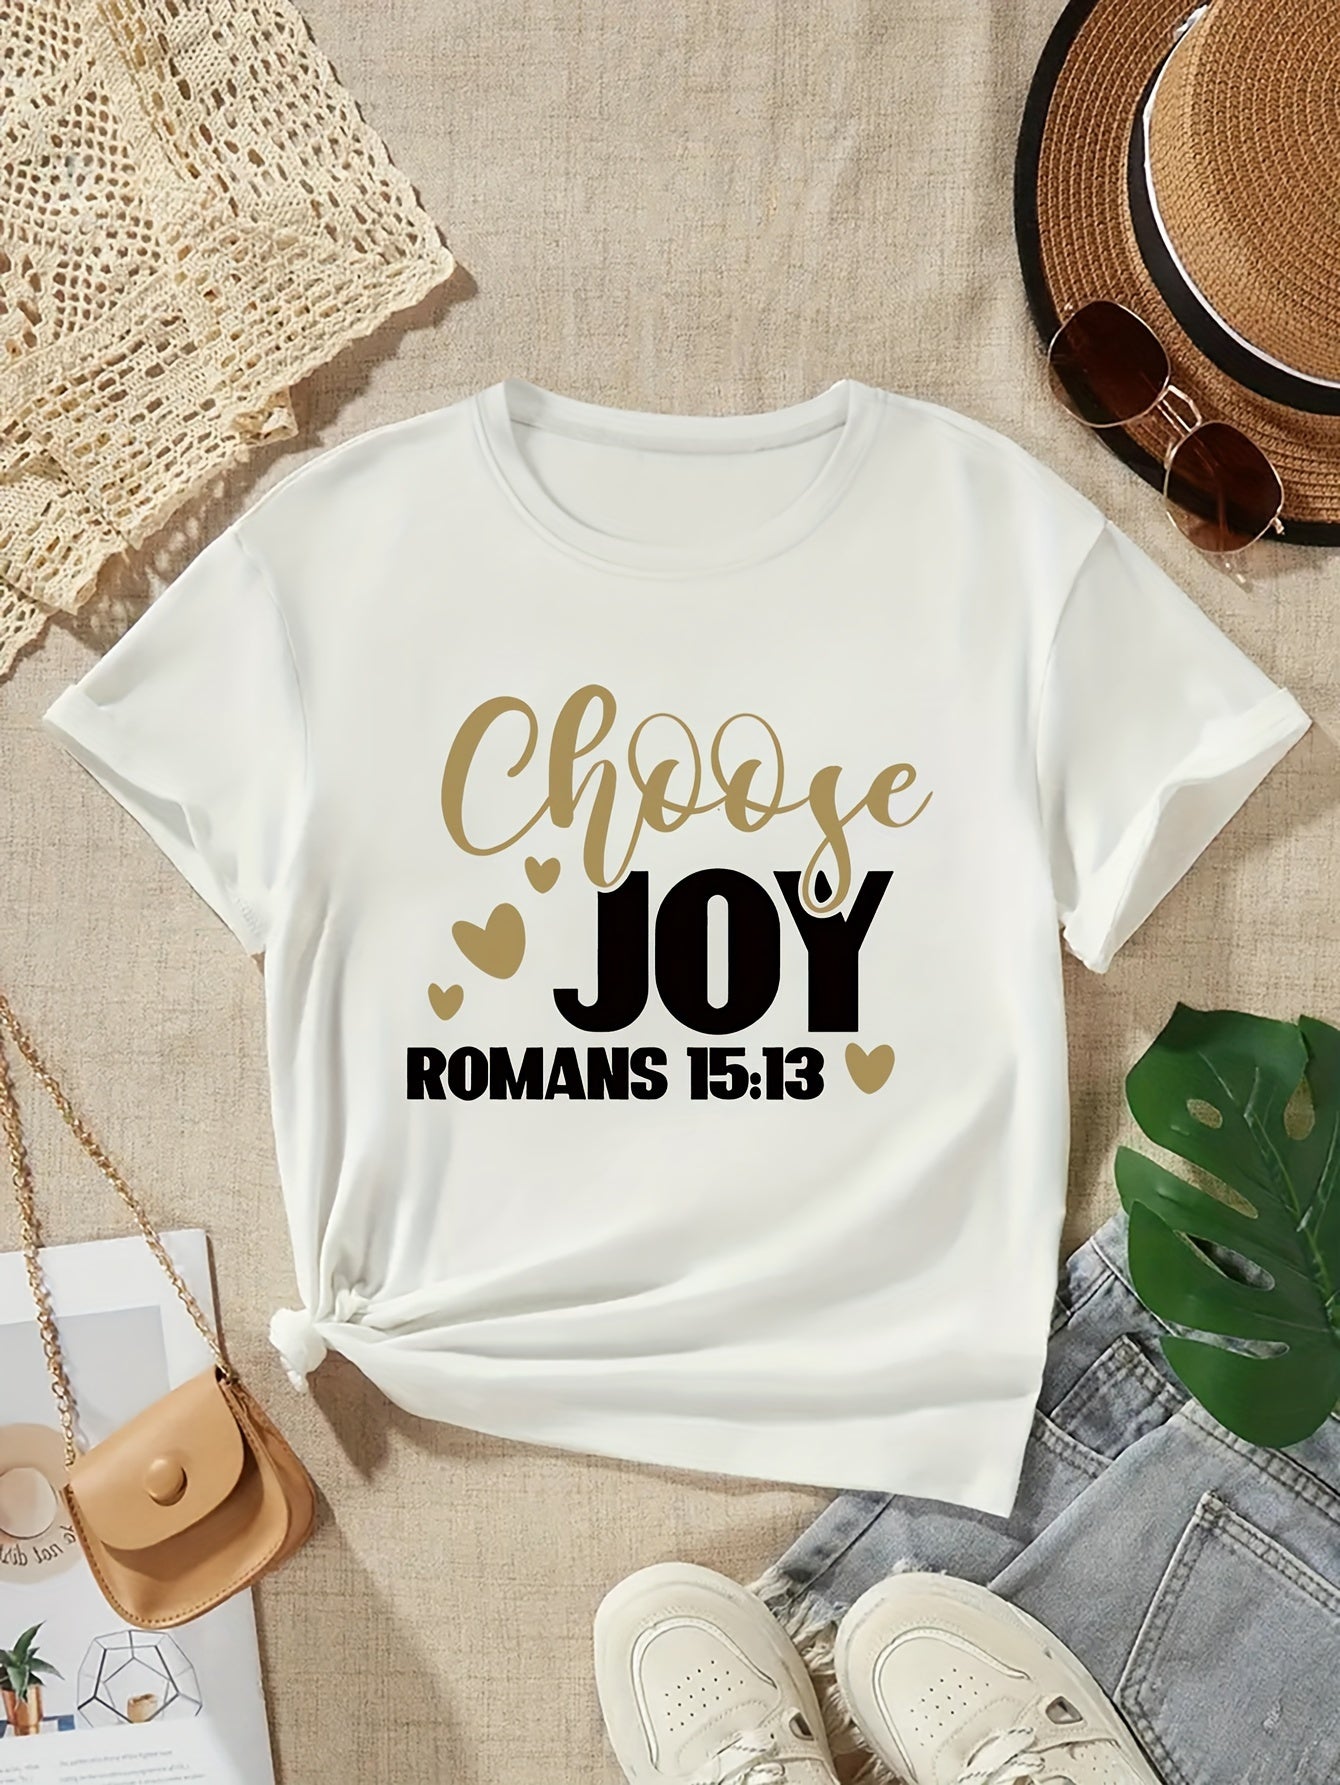 CHOOSE JOY Youth Christian T-shirt claimedbygoddesigns